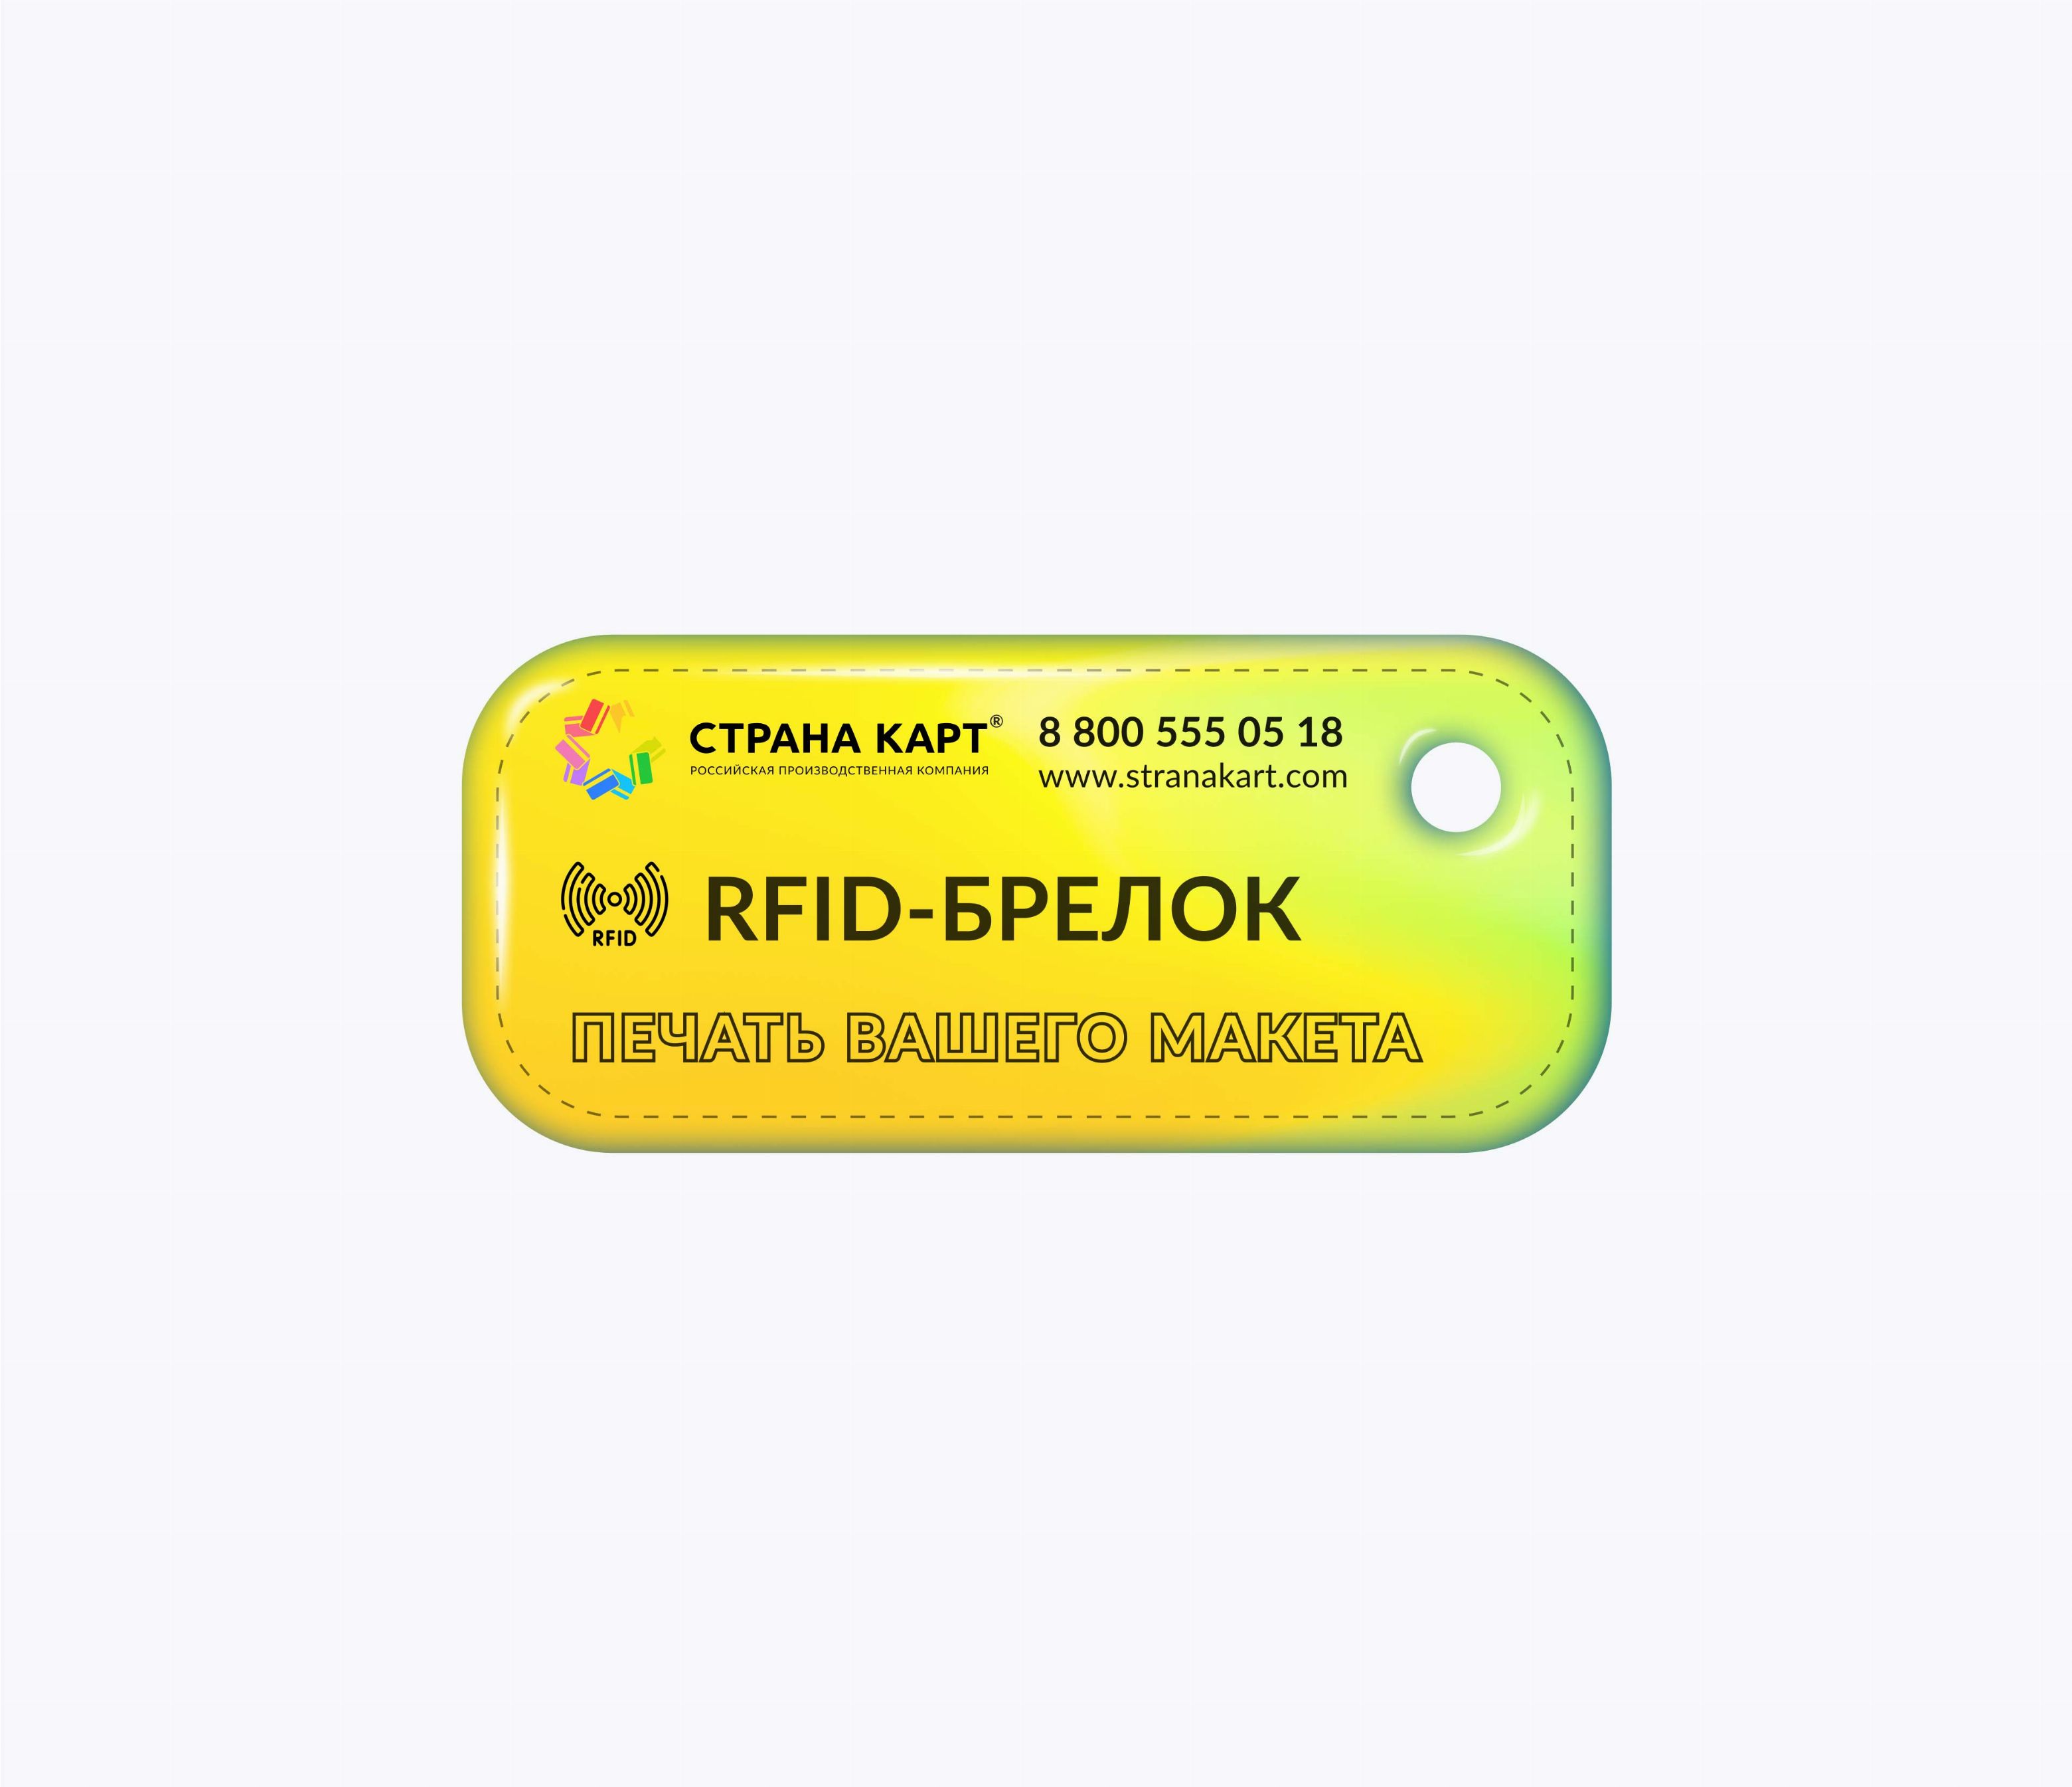 Прямоугольные мини RFID-брелоки NEOKEY® с чипом  NXP MIFARE Ultralight C 7 byte UID RFID-брелоки NEOKEY® с чипом NXP MIFARE Ultralight C 7 byte UID и вашим логотипом